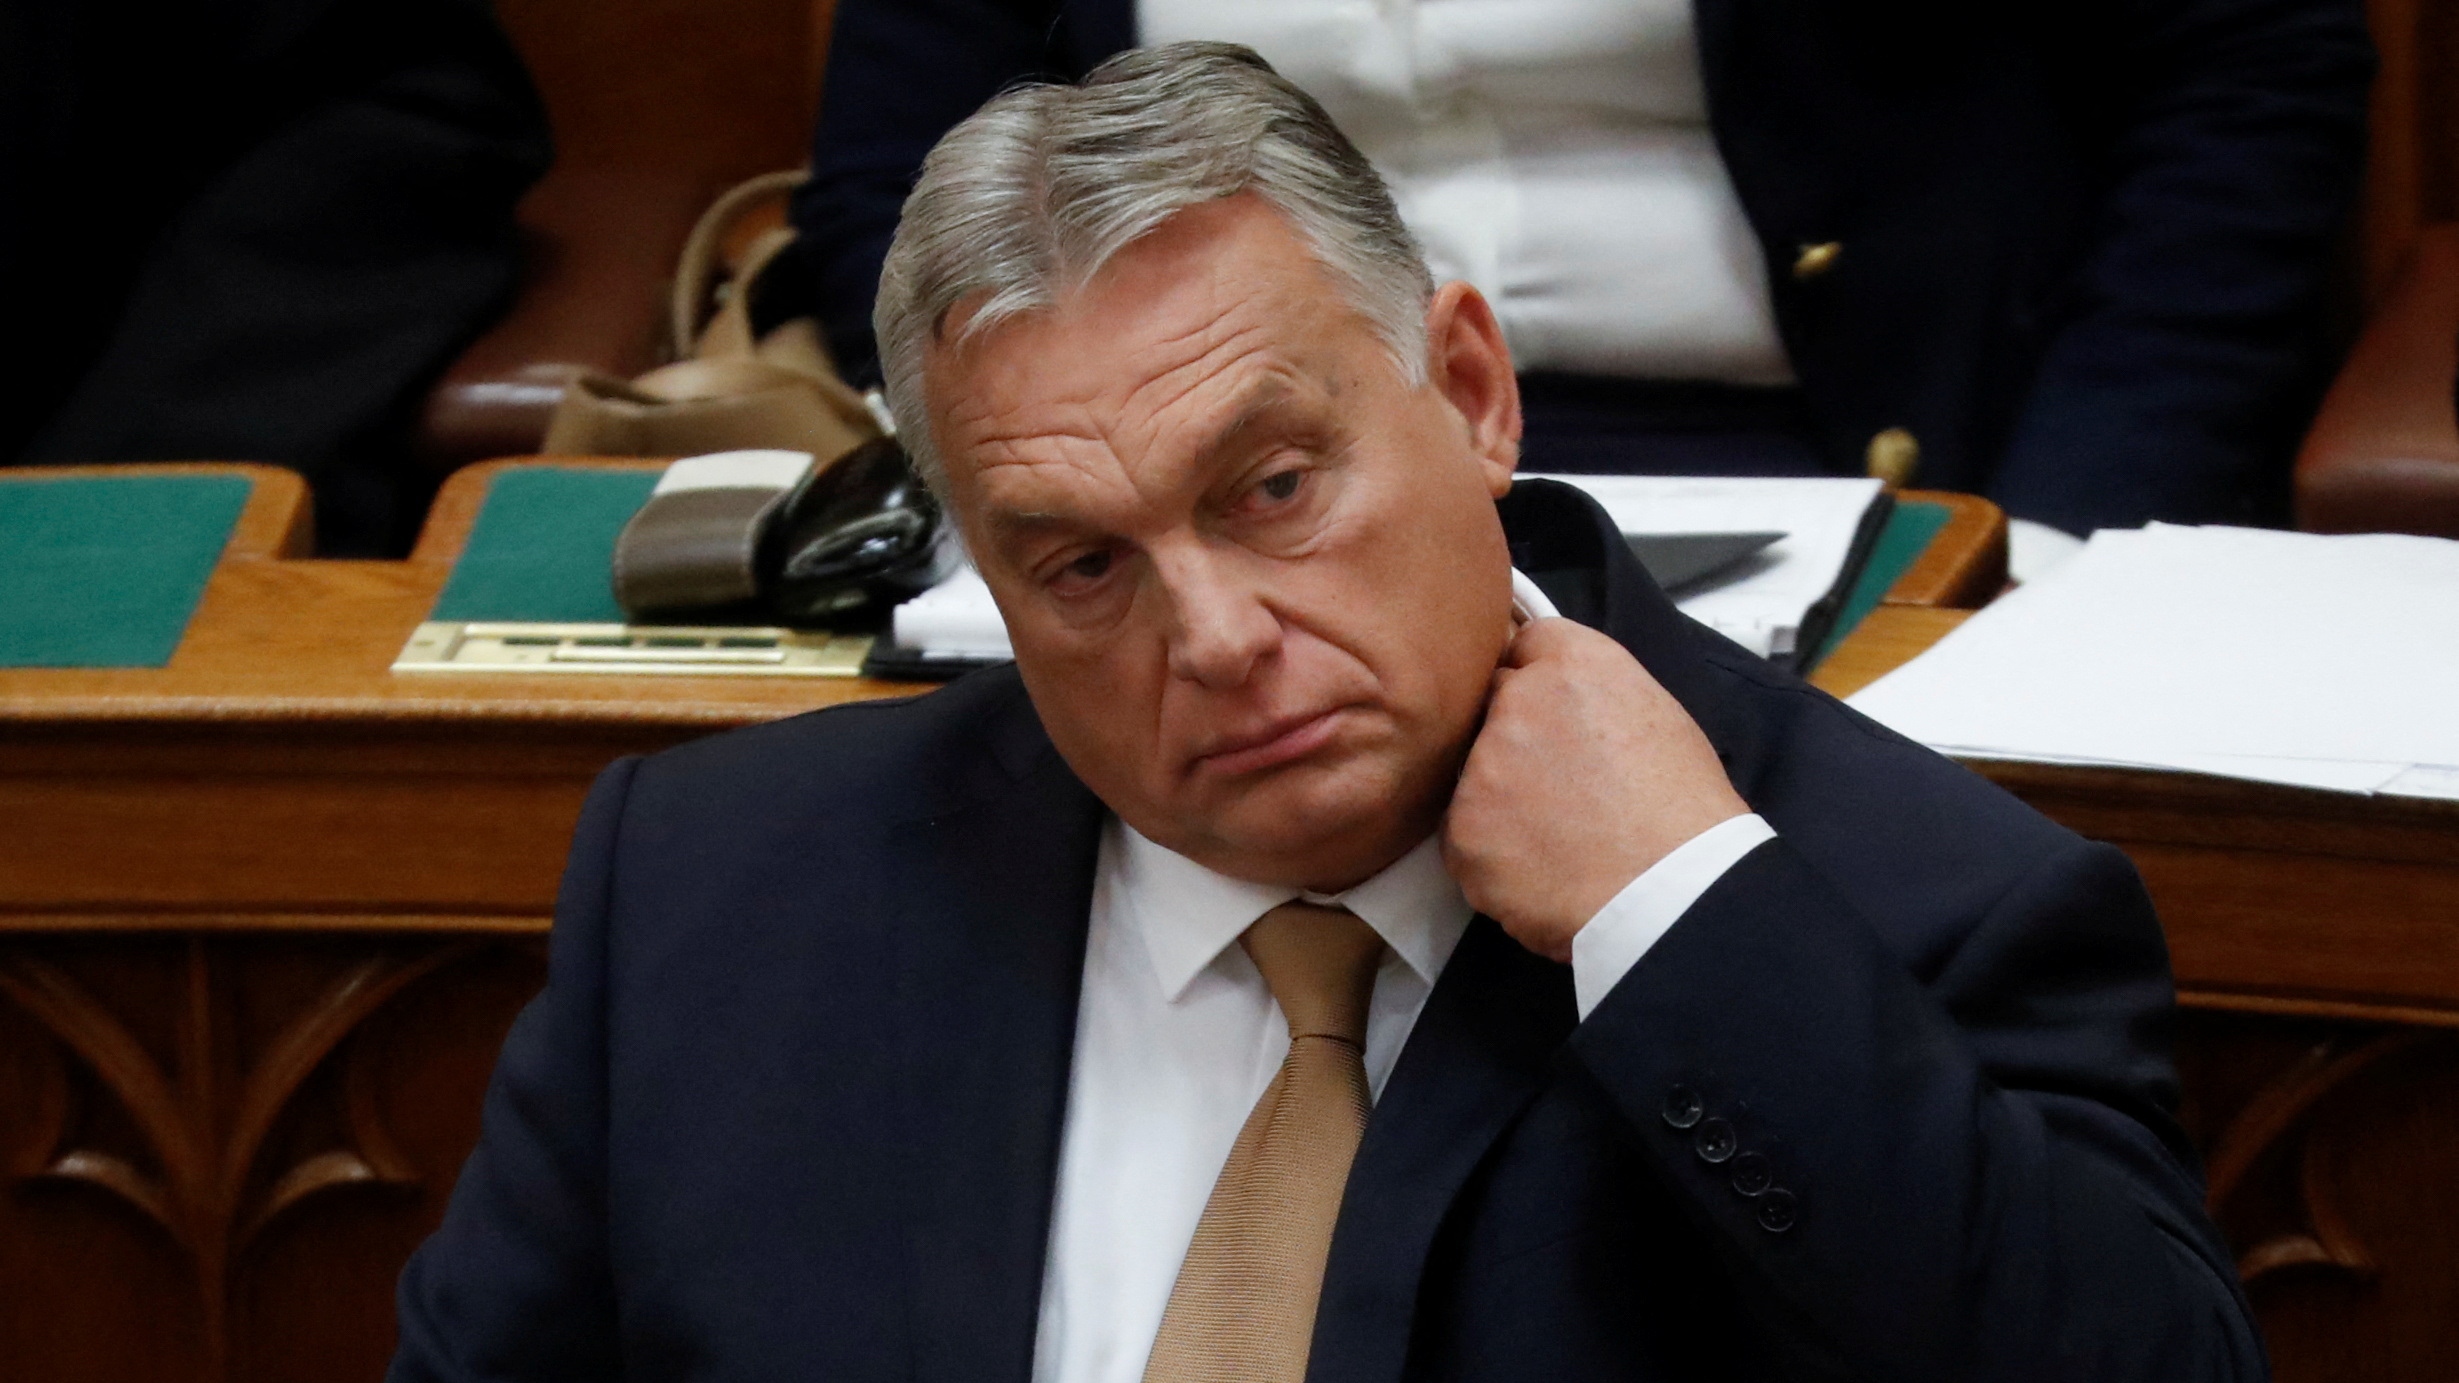 Viktor Orban addressed parliament for the first time since the EU announced a freeze on fundung./Bernadett Szabo/Reuters